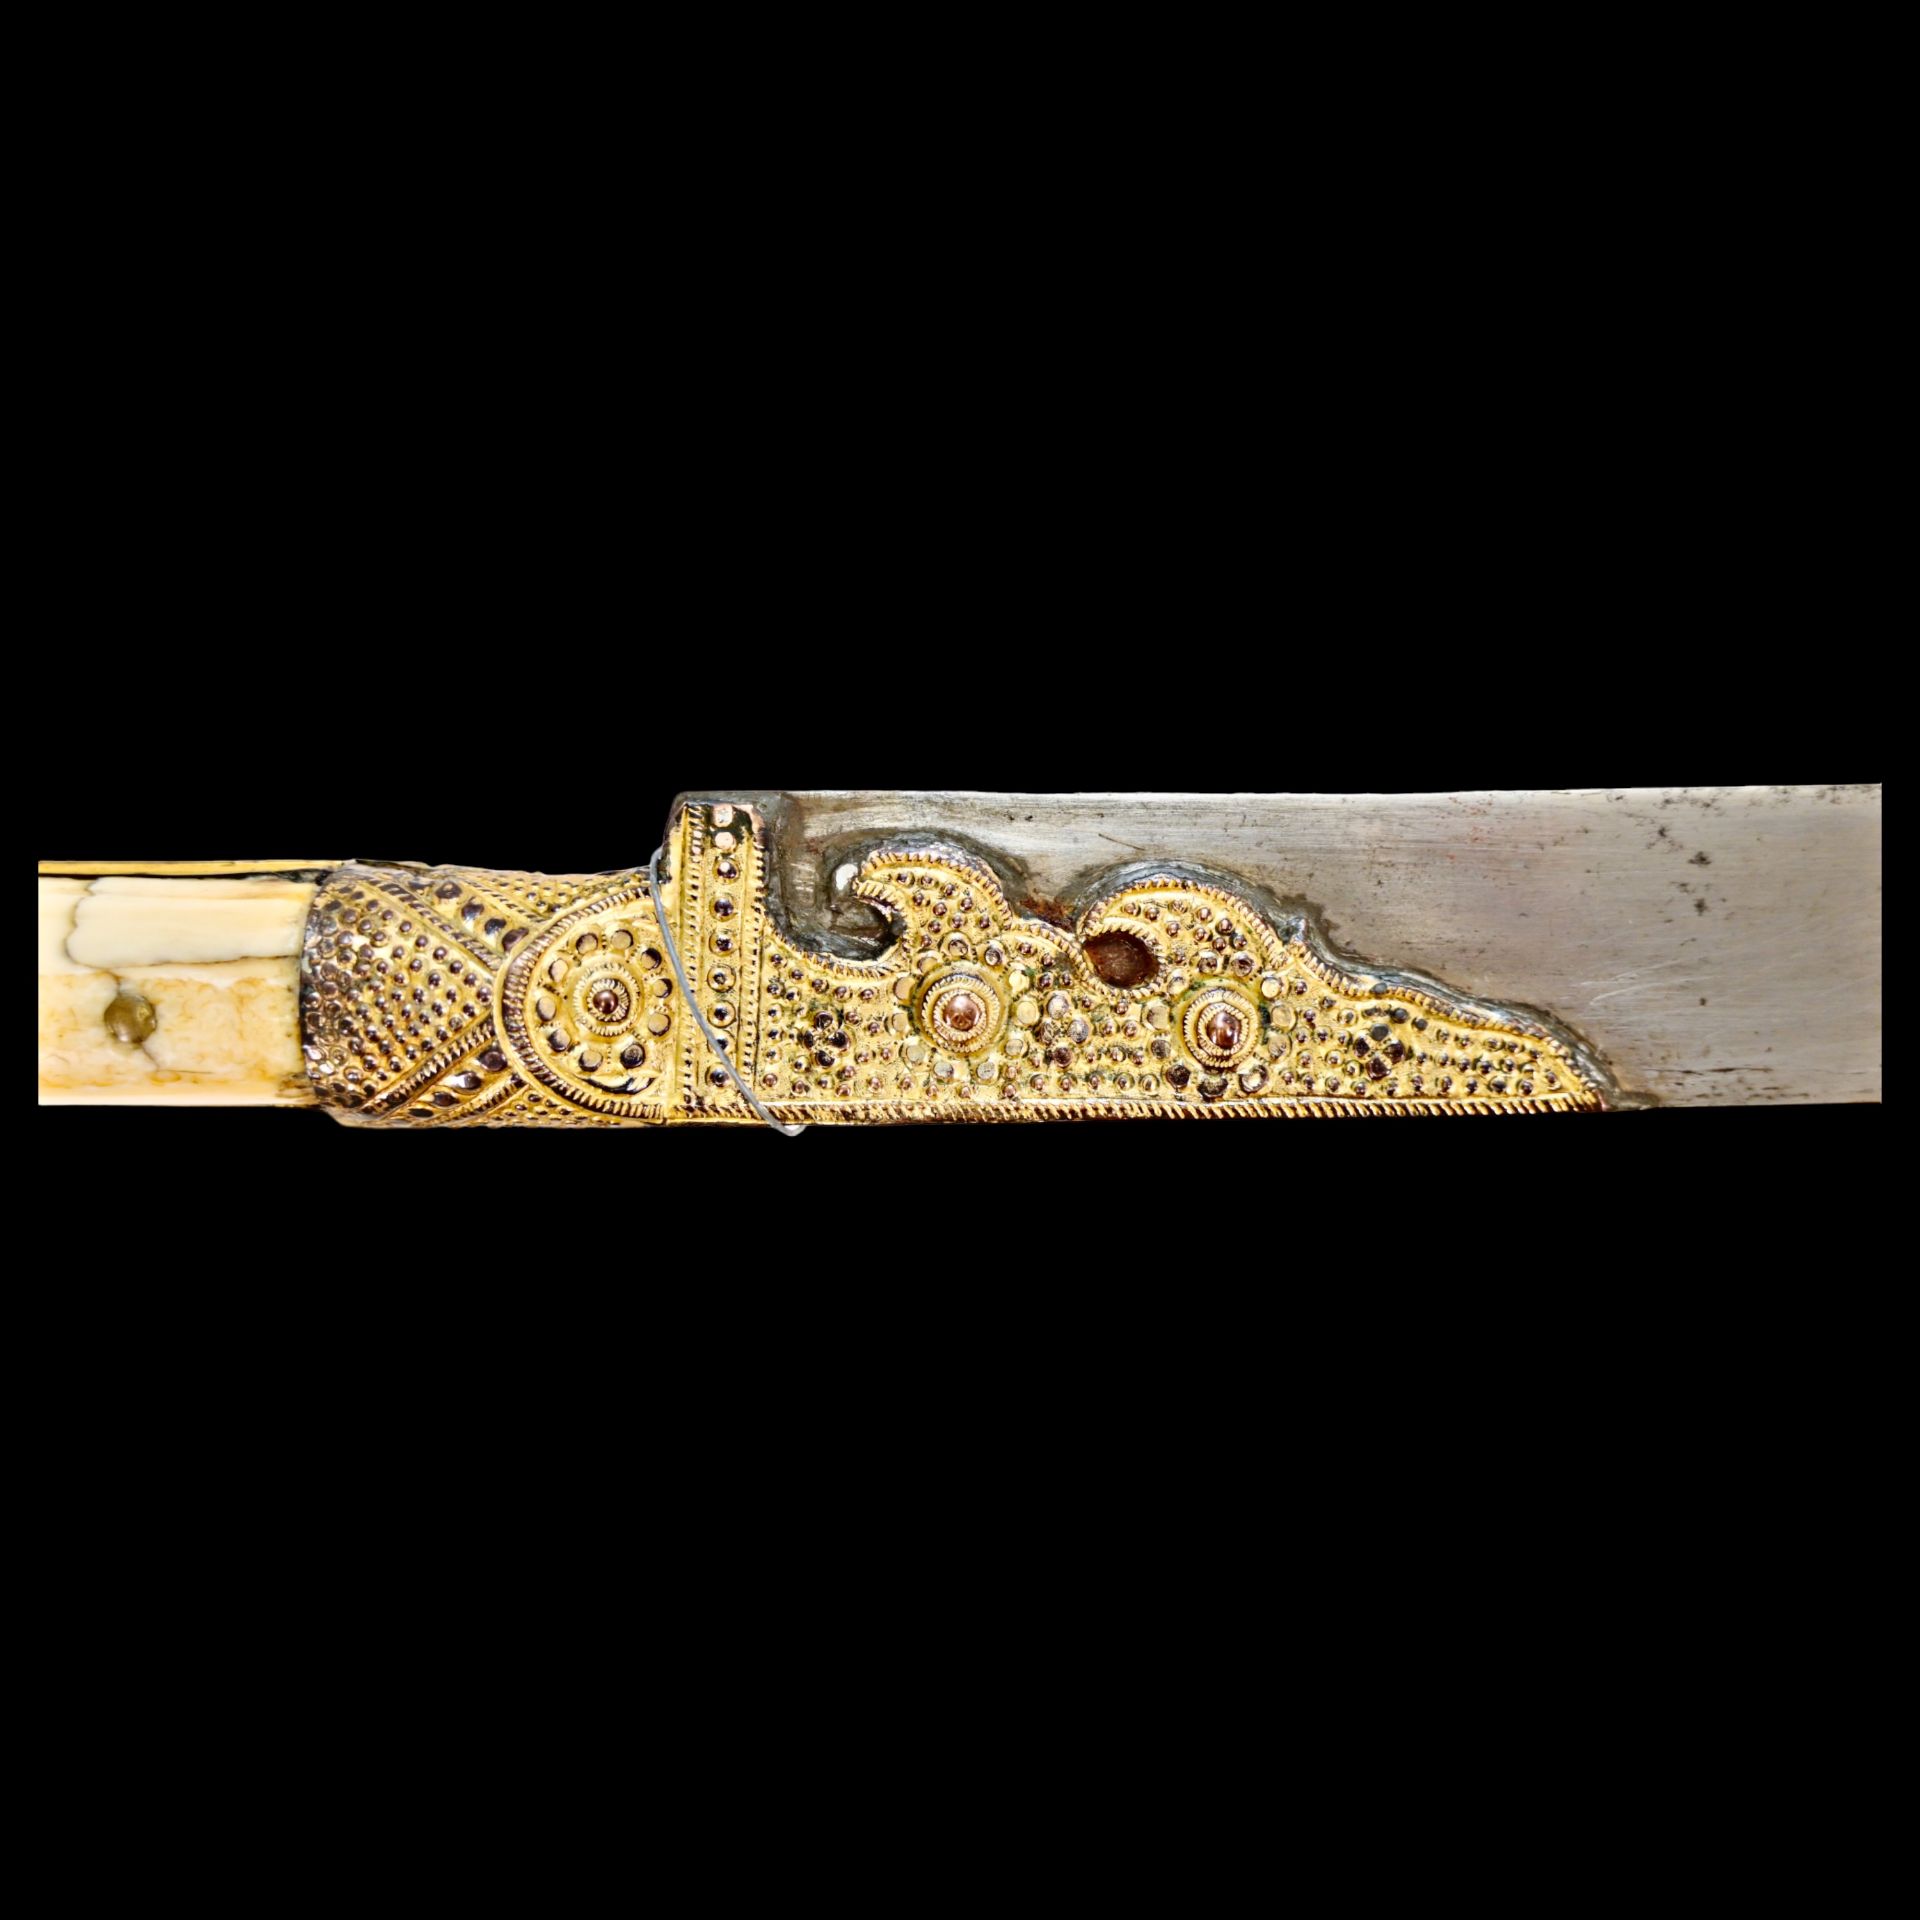 Magnificent Ottoman yatagan sword with bone hilt and gold kofgari on the blade, 1823. - Image 21 of 32